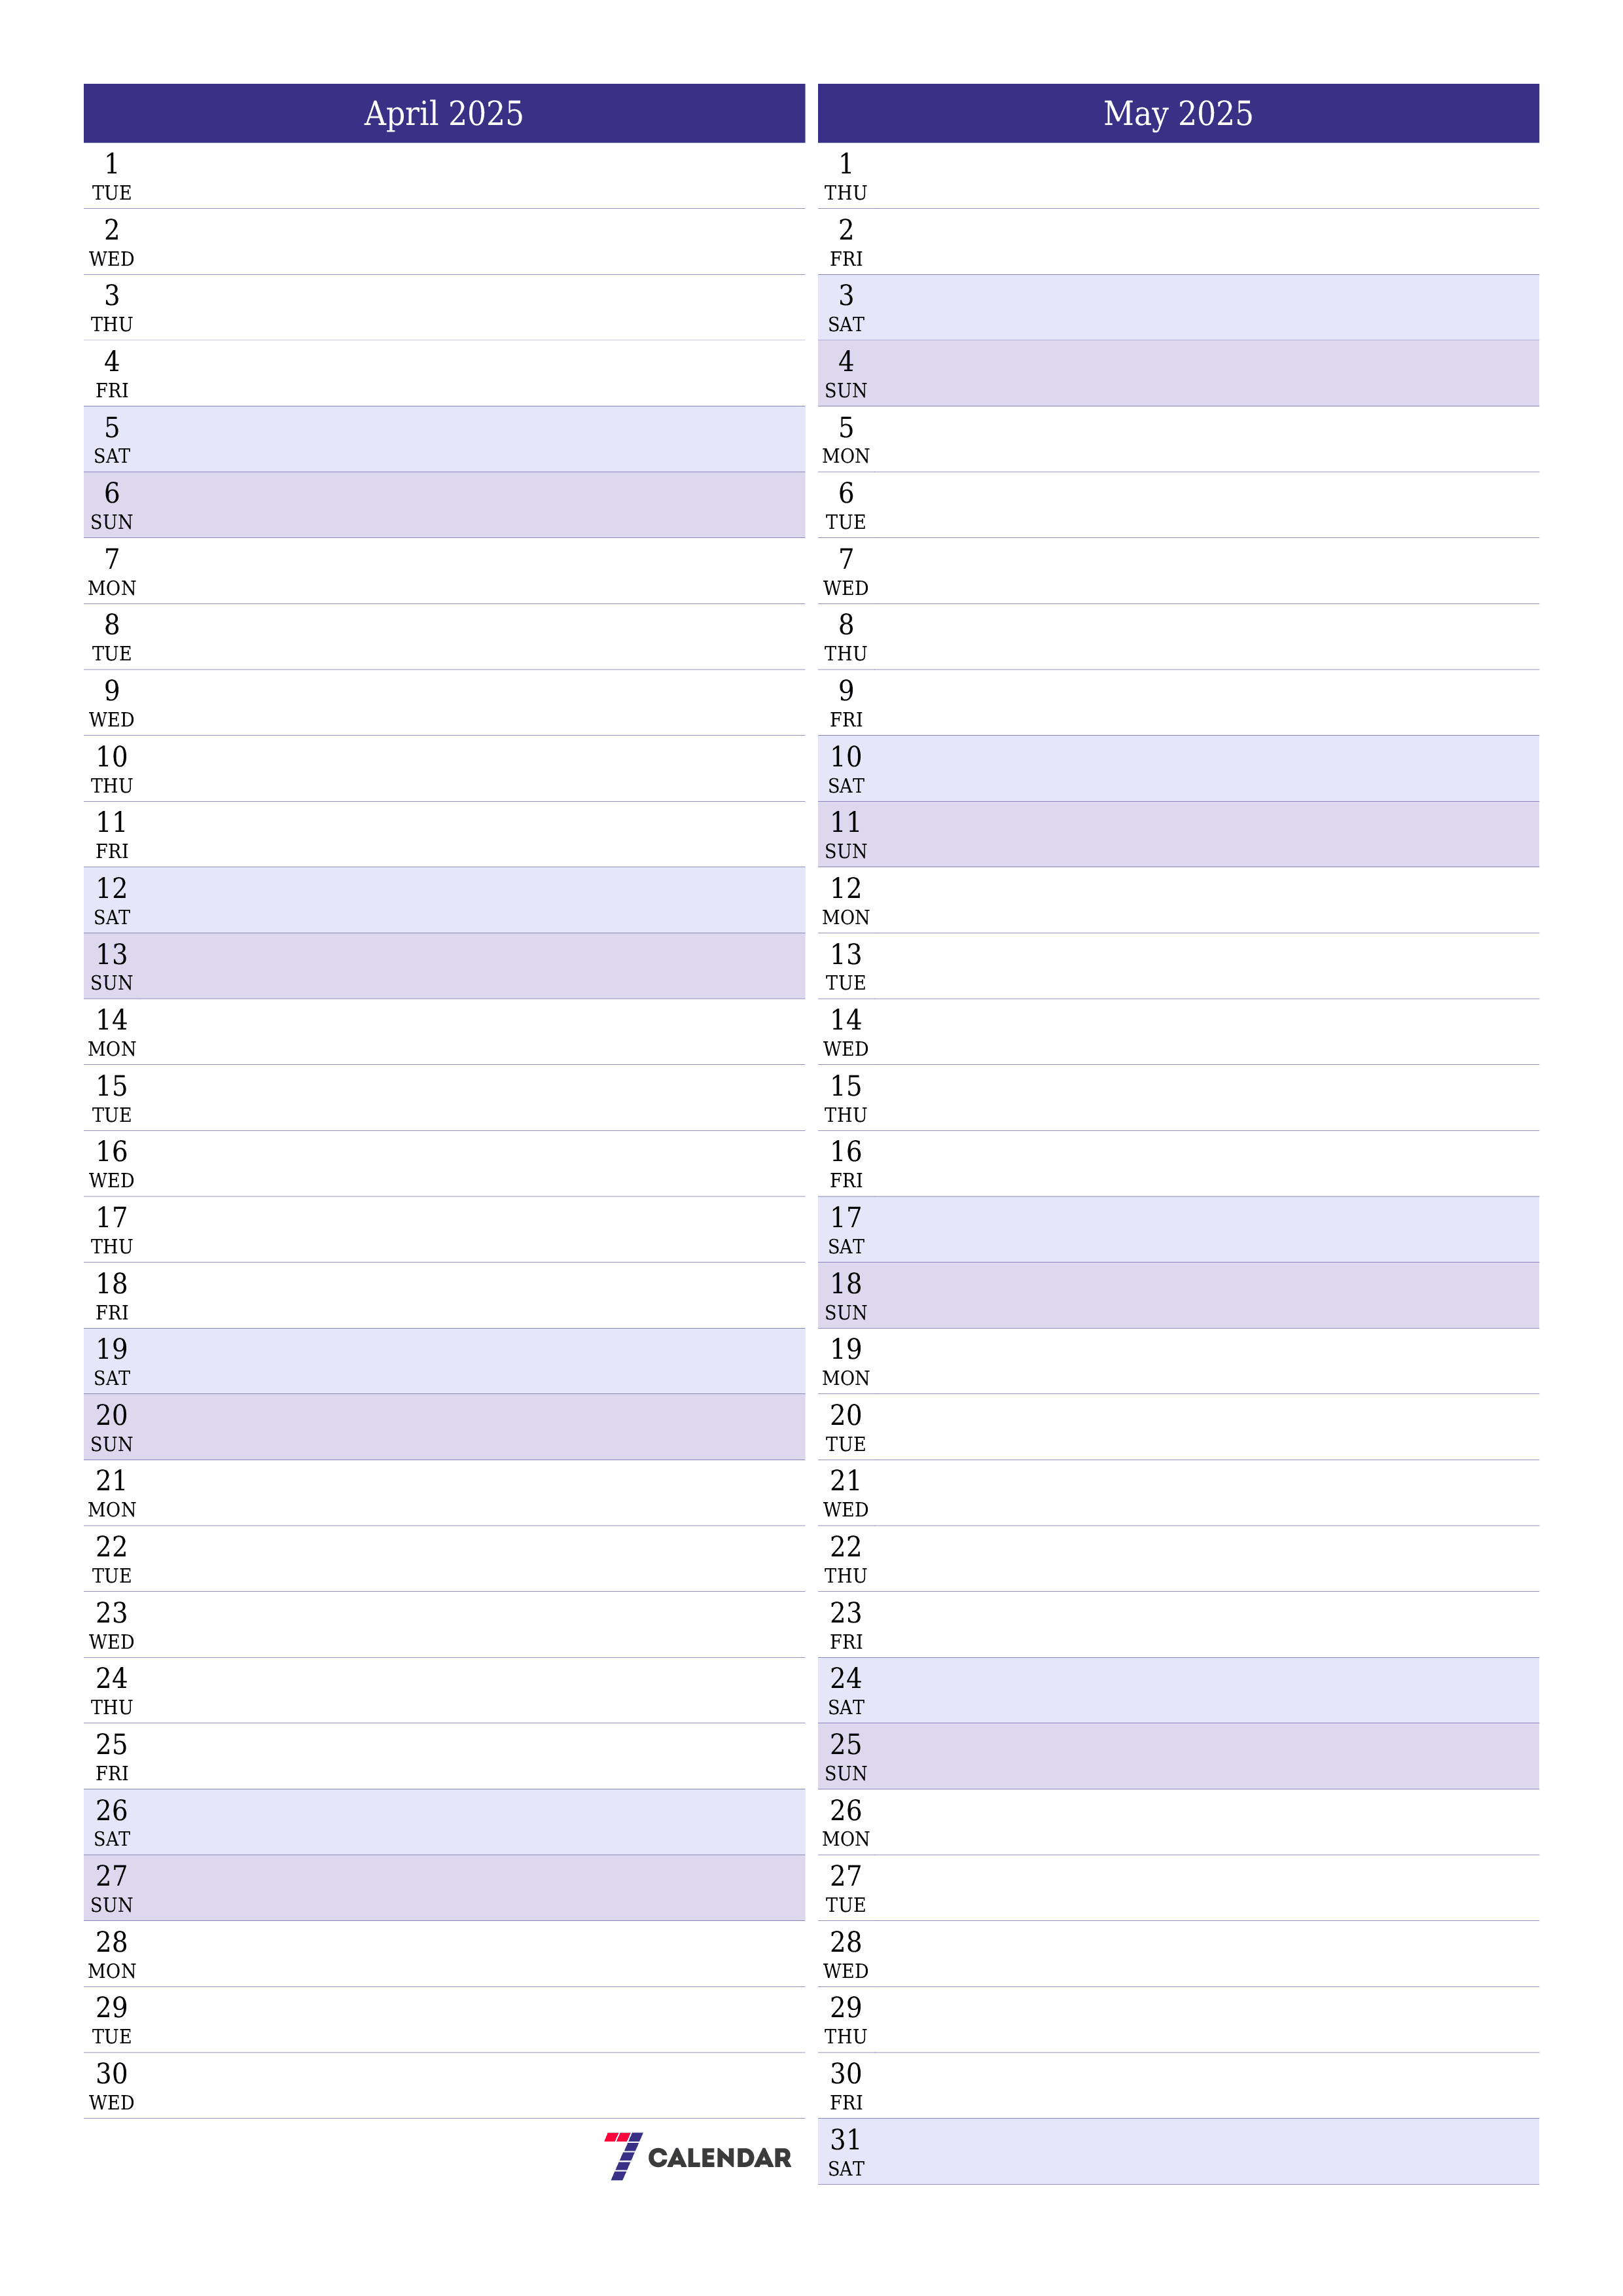 Blank calendar April 2025